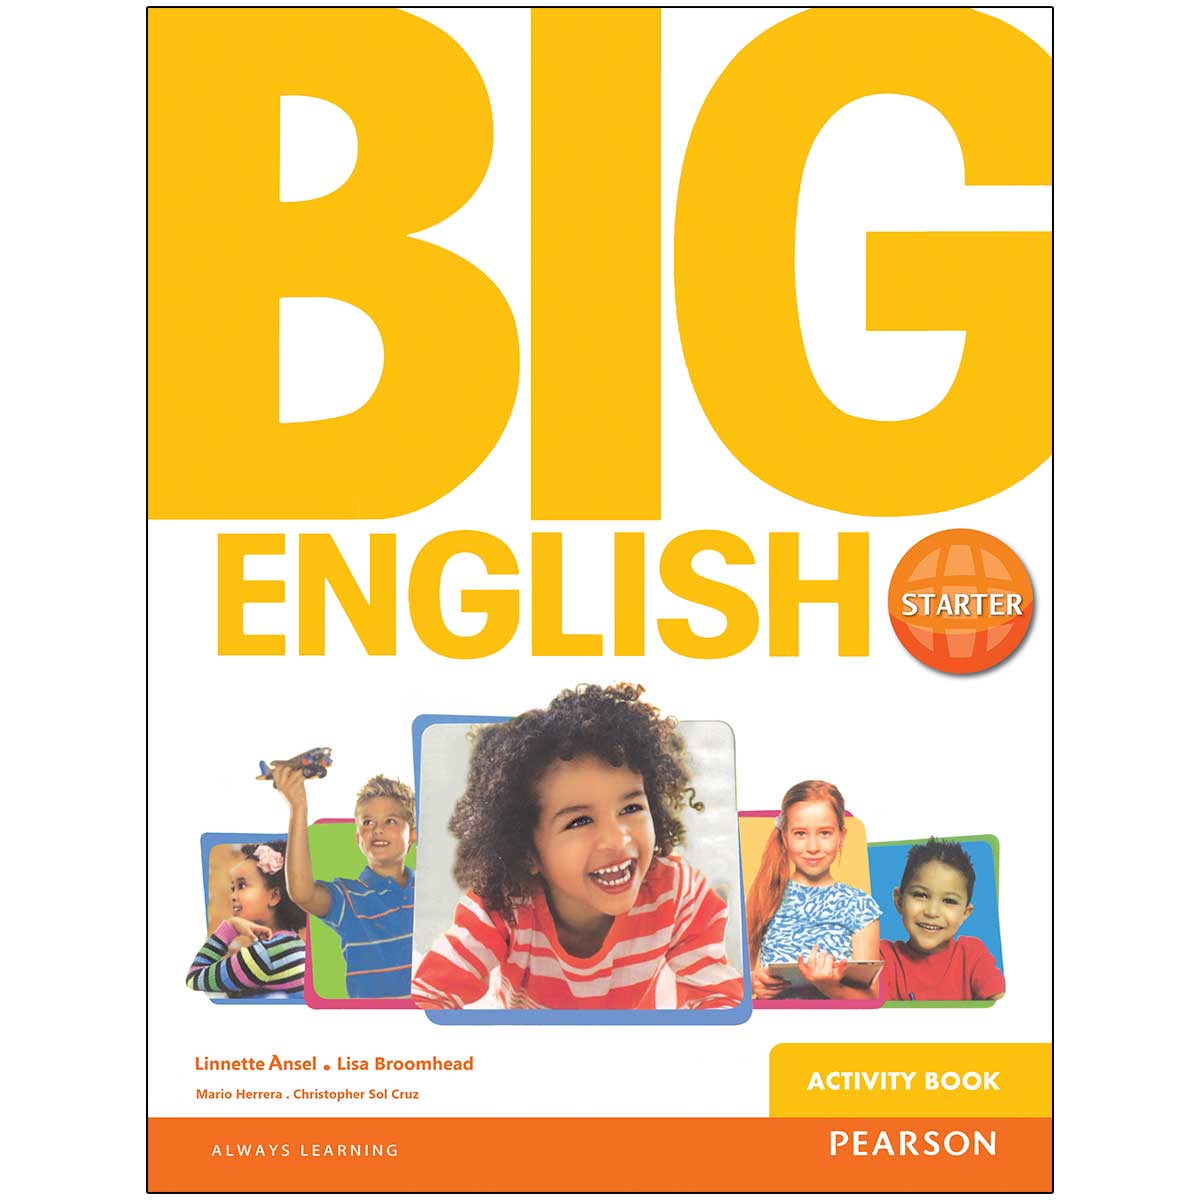 کتاب Big english starter اثر linnette ansel and lisa broomhead انتشارات Pearson 